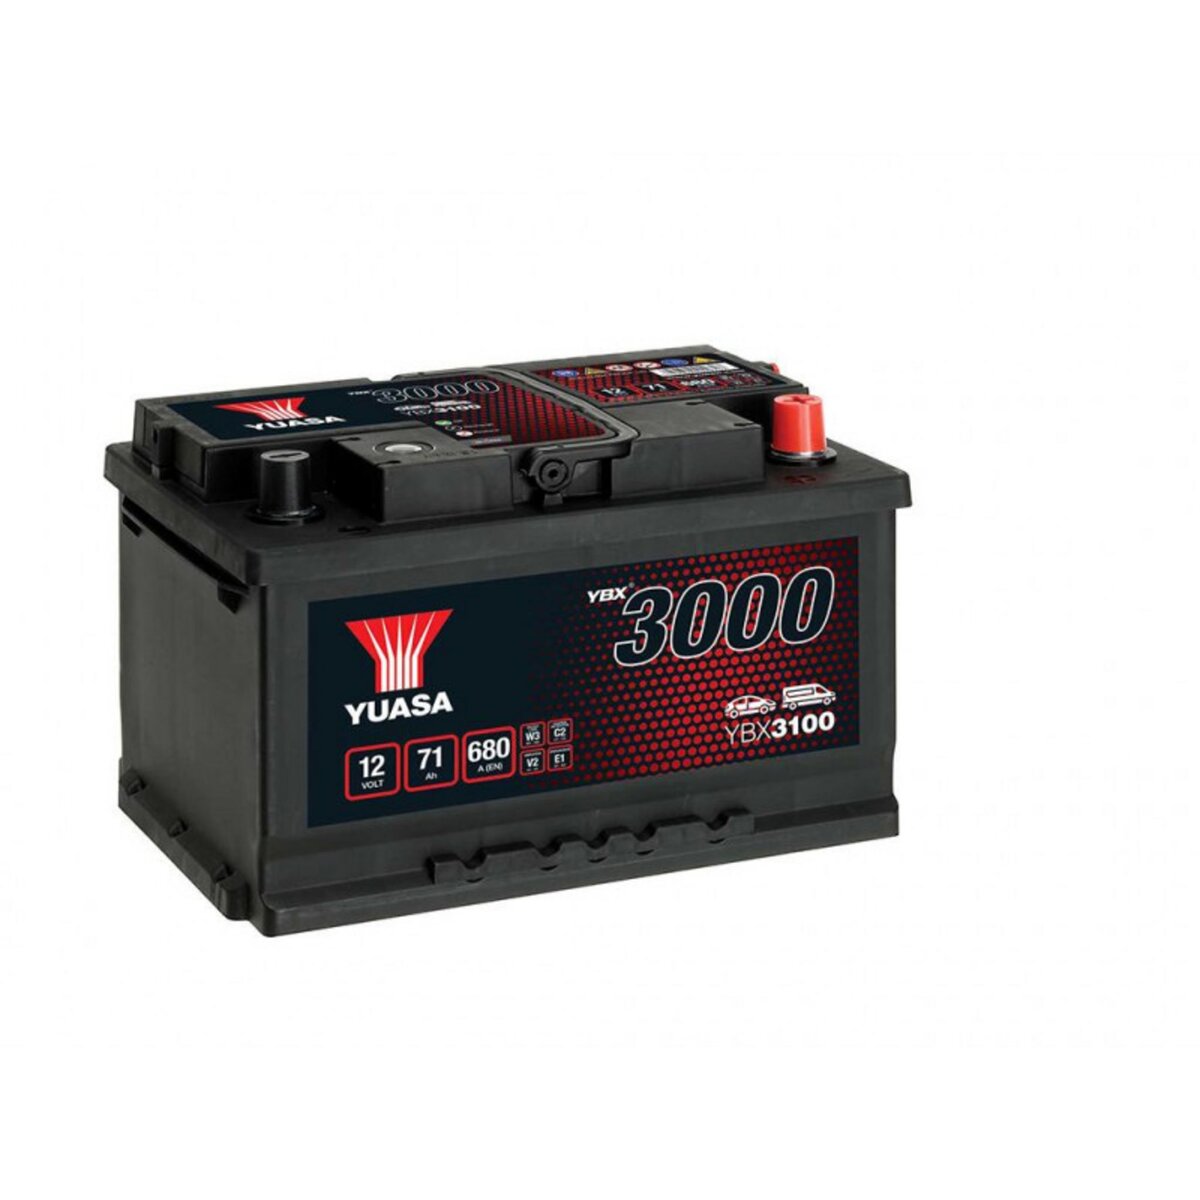 YUASA Batterie Yuasa SMF YBX3100 12V 71ah 650A